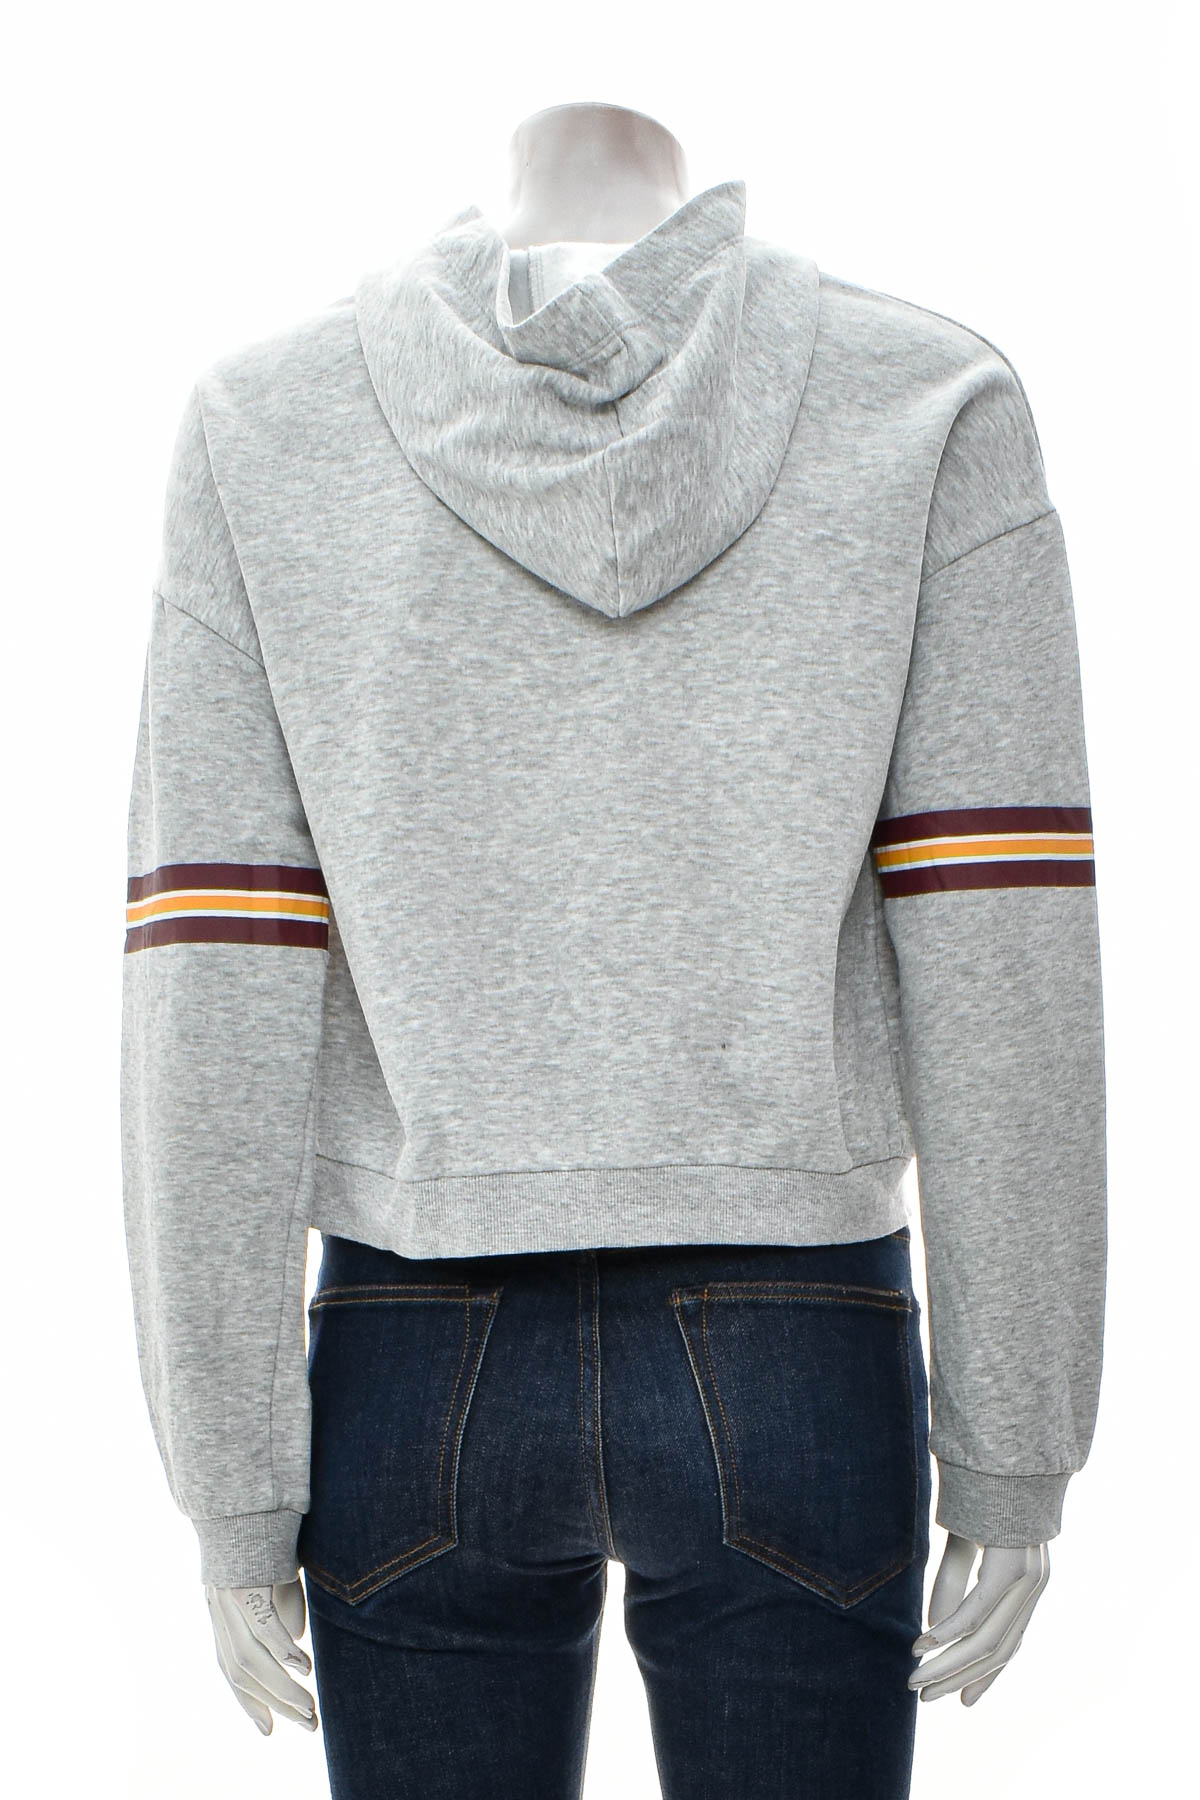 Sweatshirt for Girl - H&M - 1